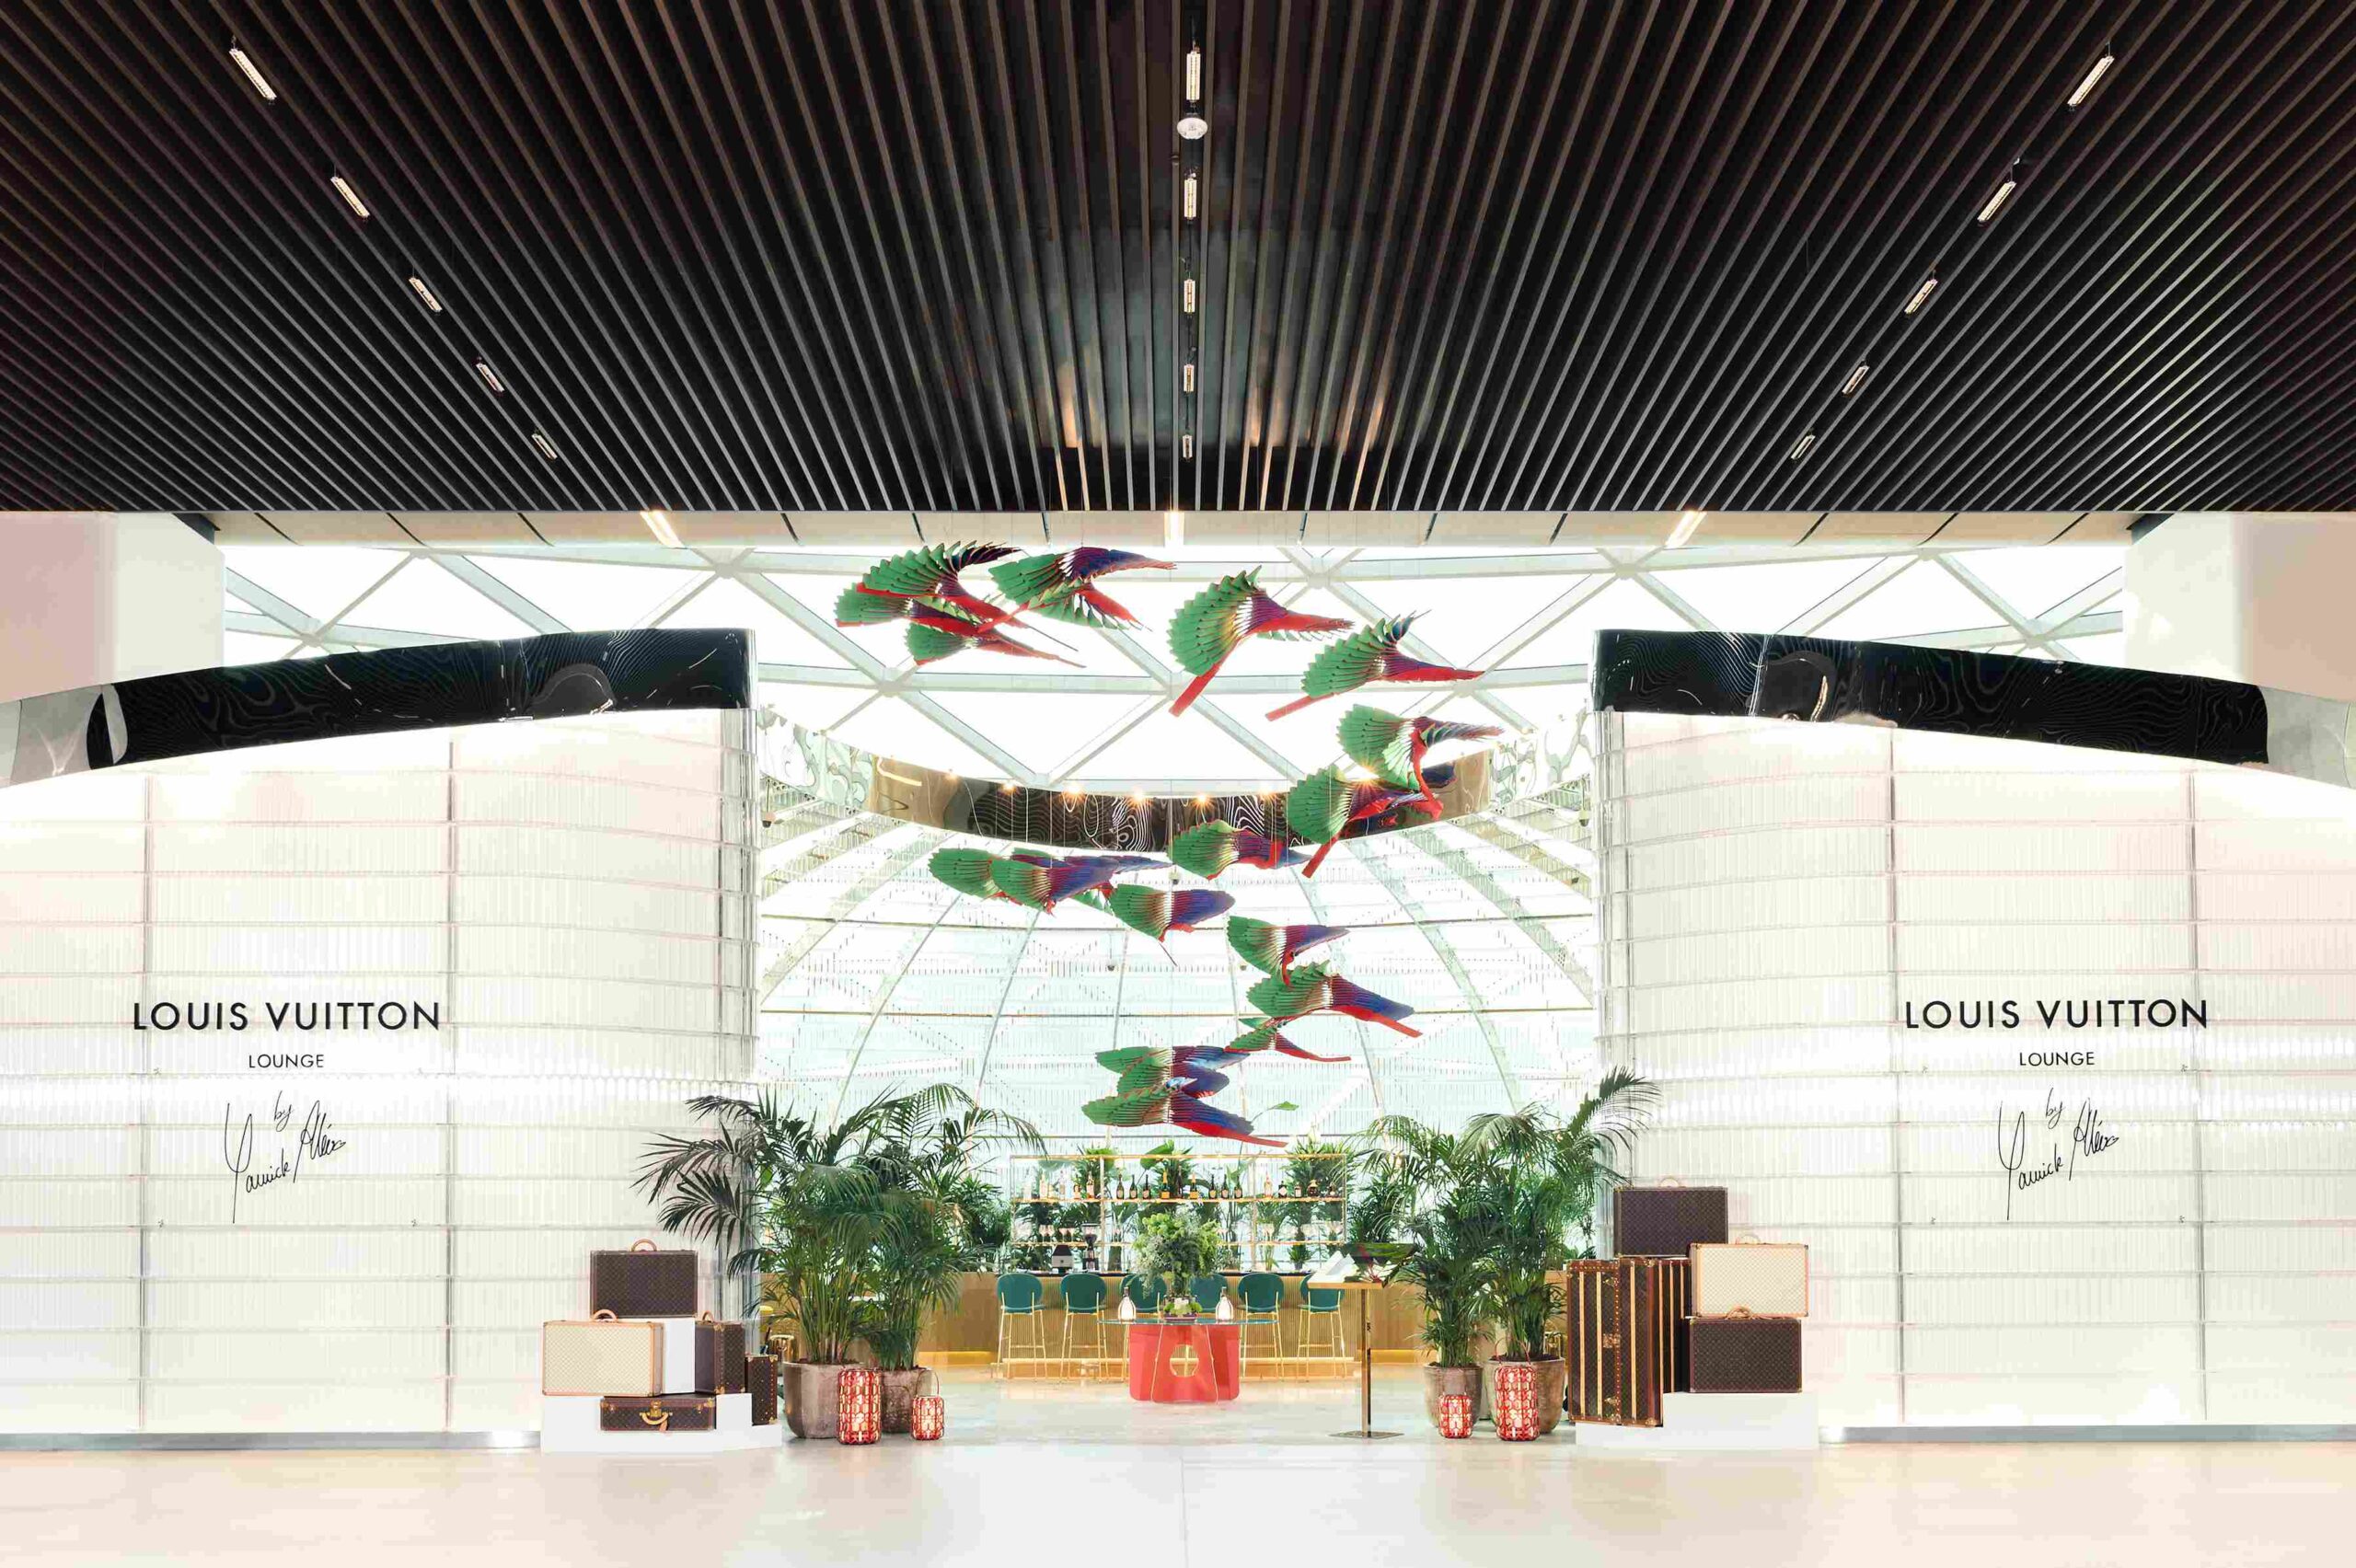 Louis Vuitton's airport lounge Qatar Hamad International Airport 